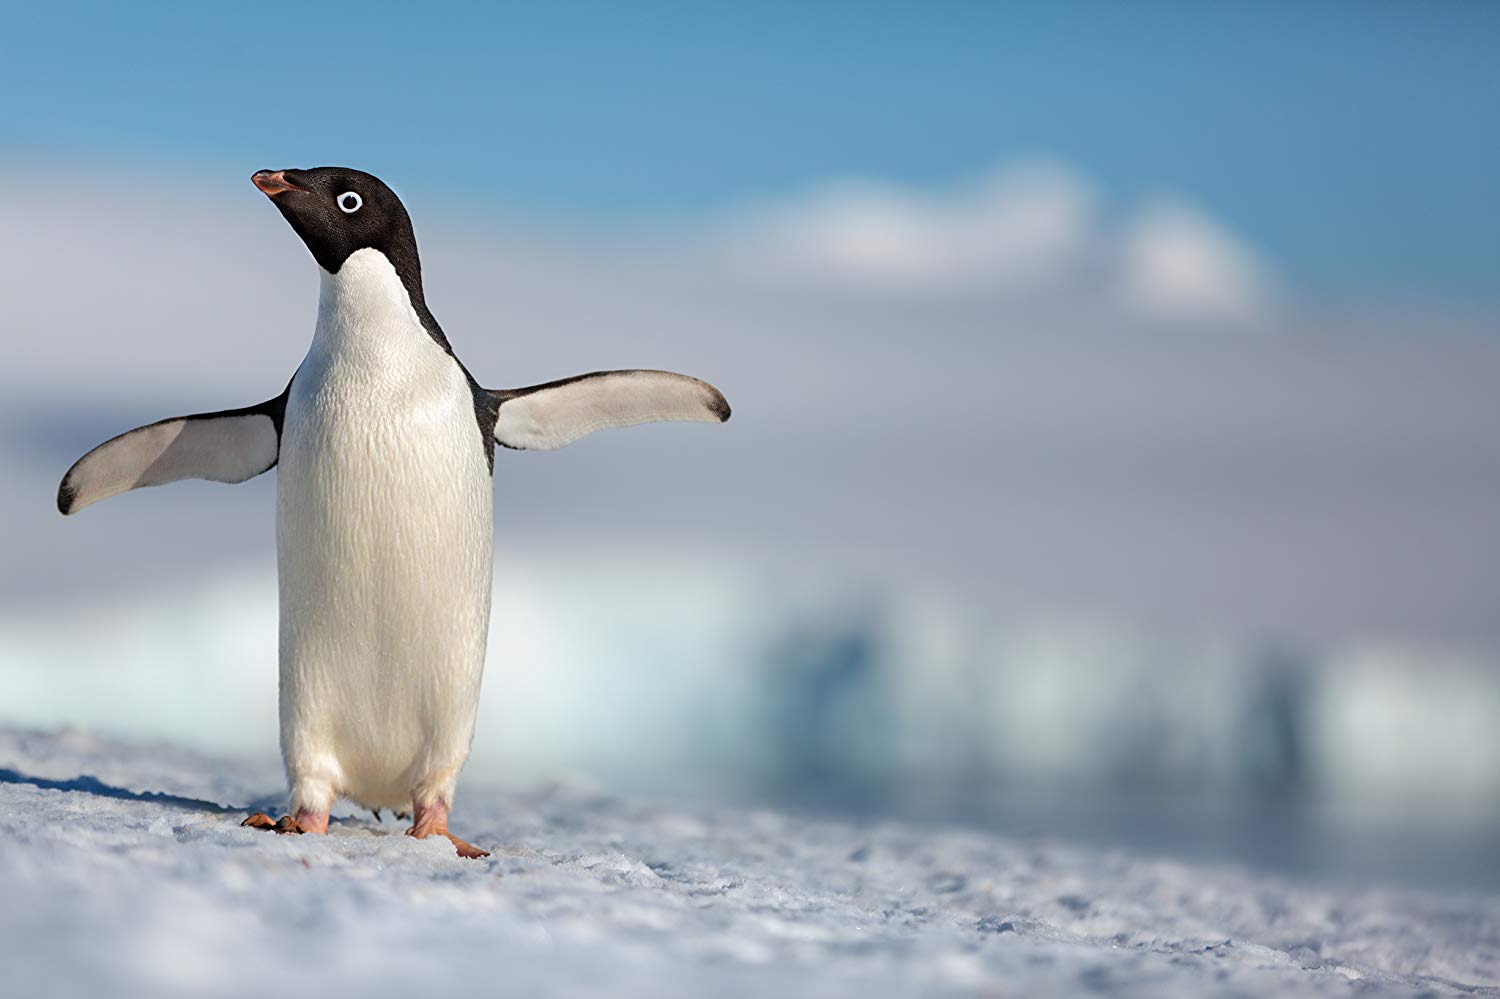 Penguins | Disneynature